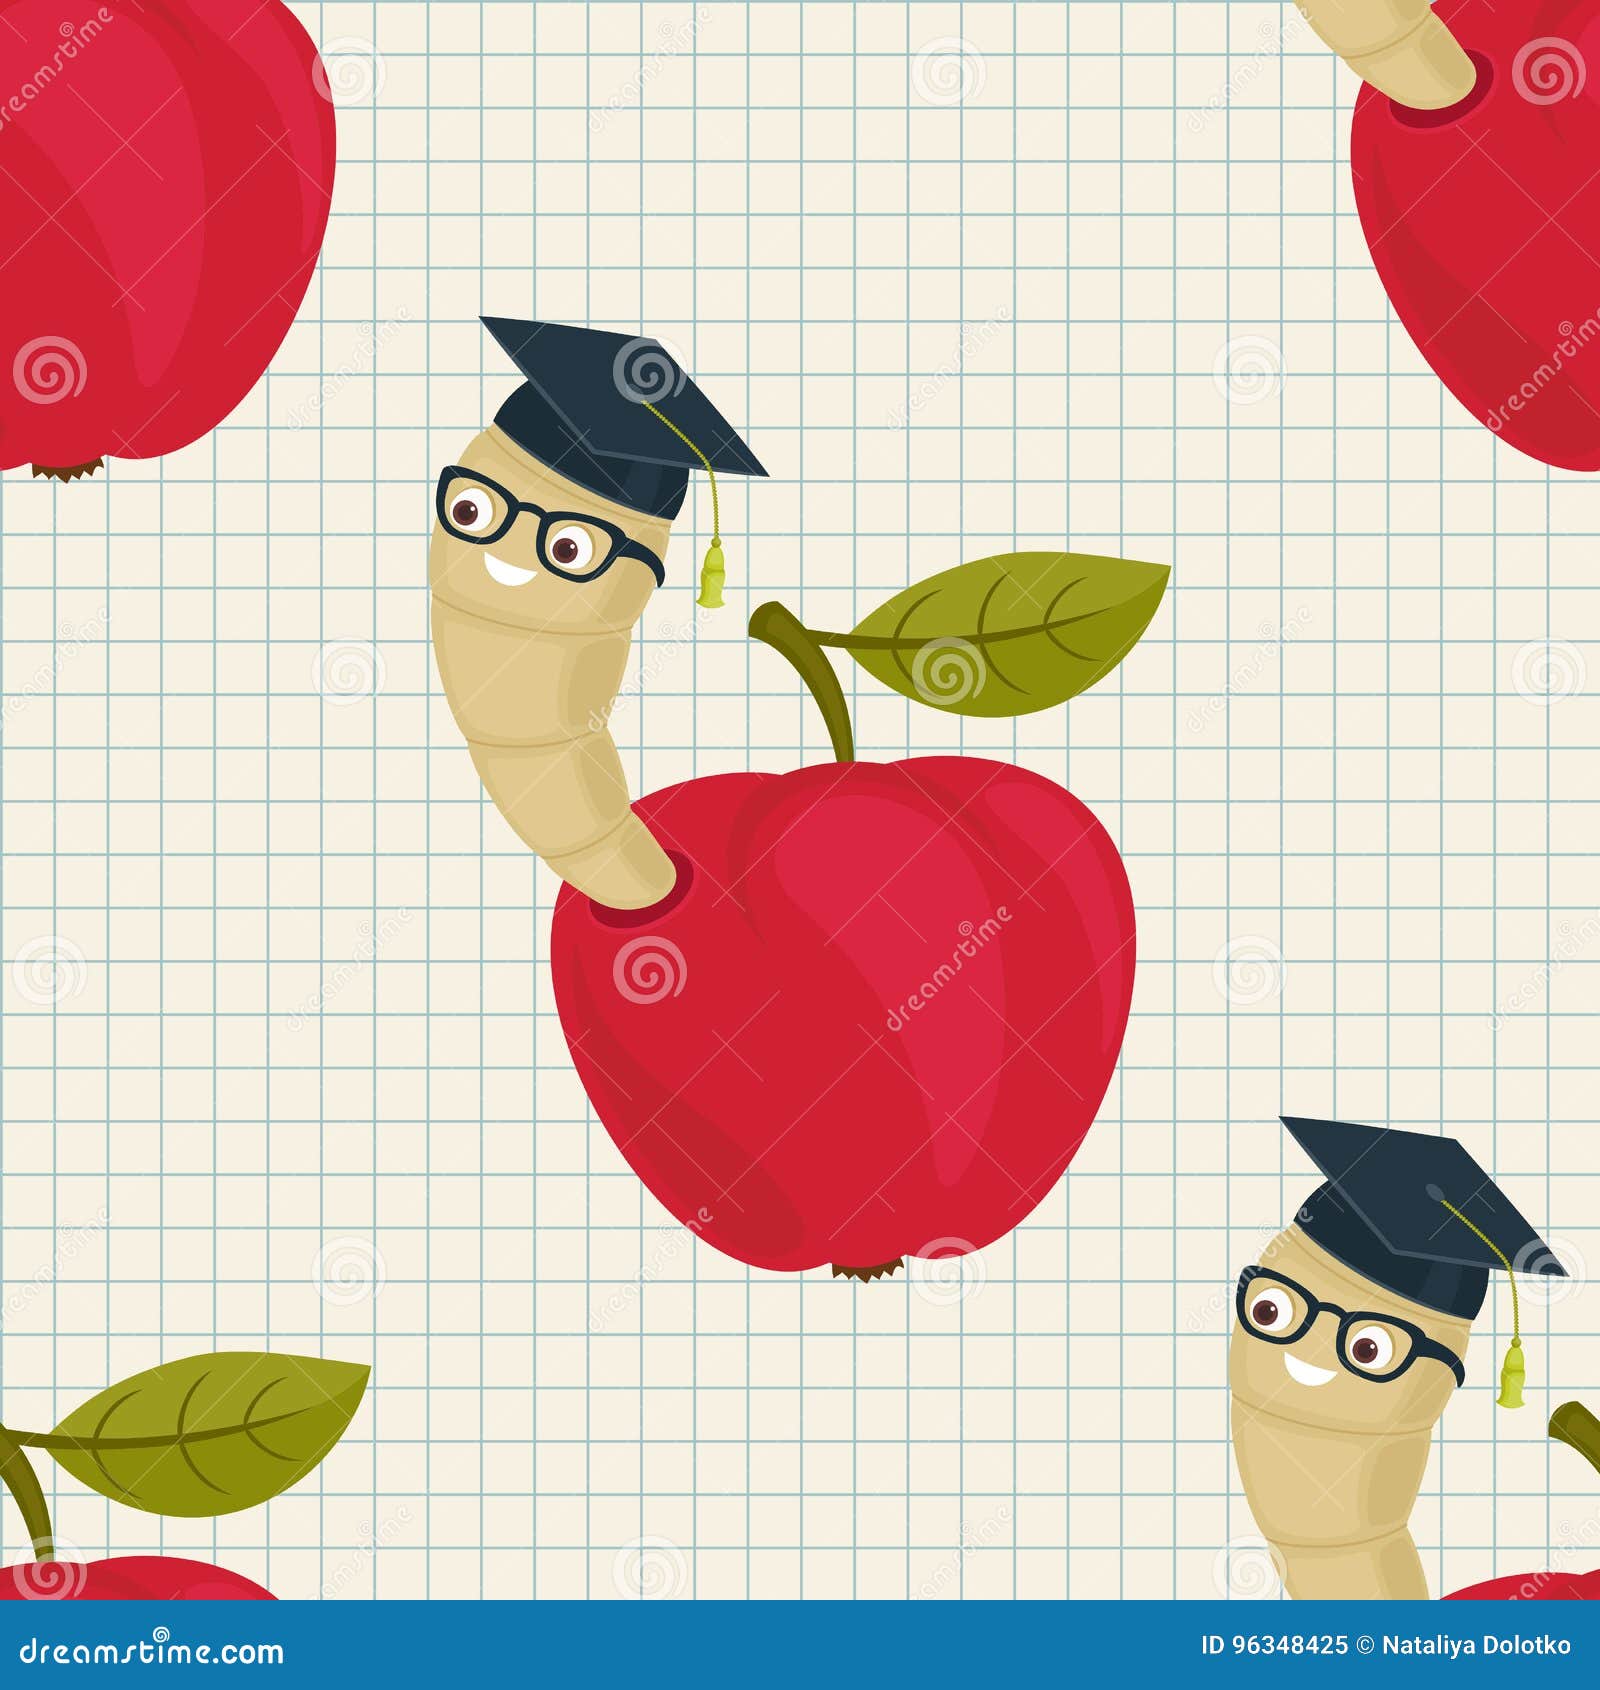 cartoon worm in alumni hat and glasses peeking from a read apple